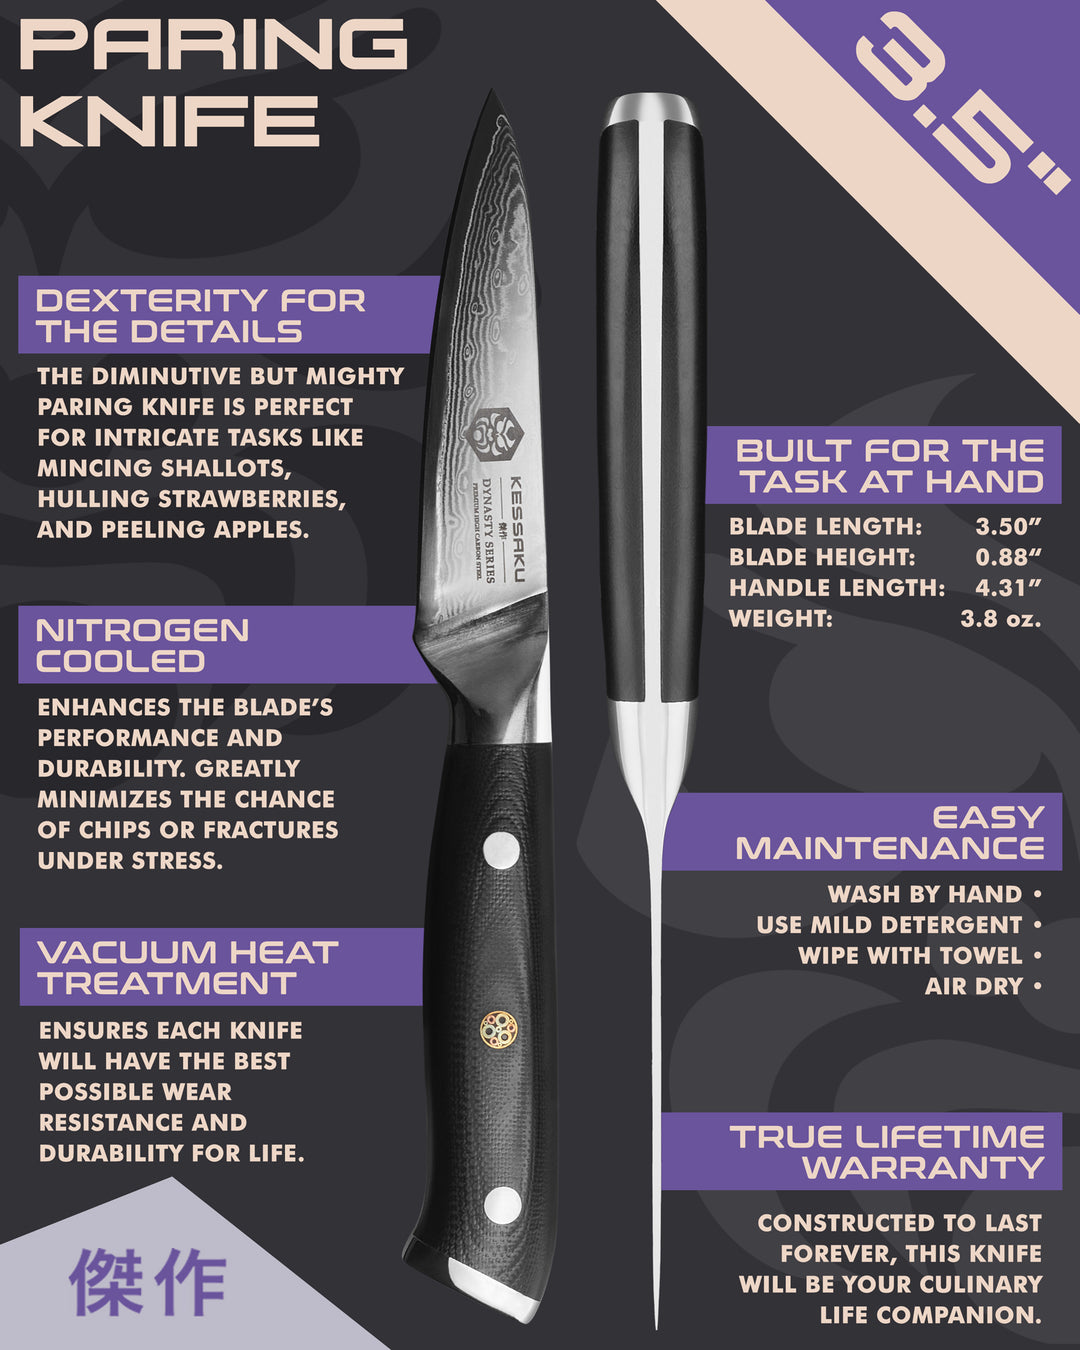 Kessaku Damascus Paring Knife uses, dimensions, maintenance, warranty info, and additional blade treatments